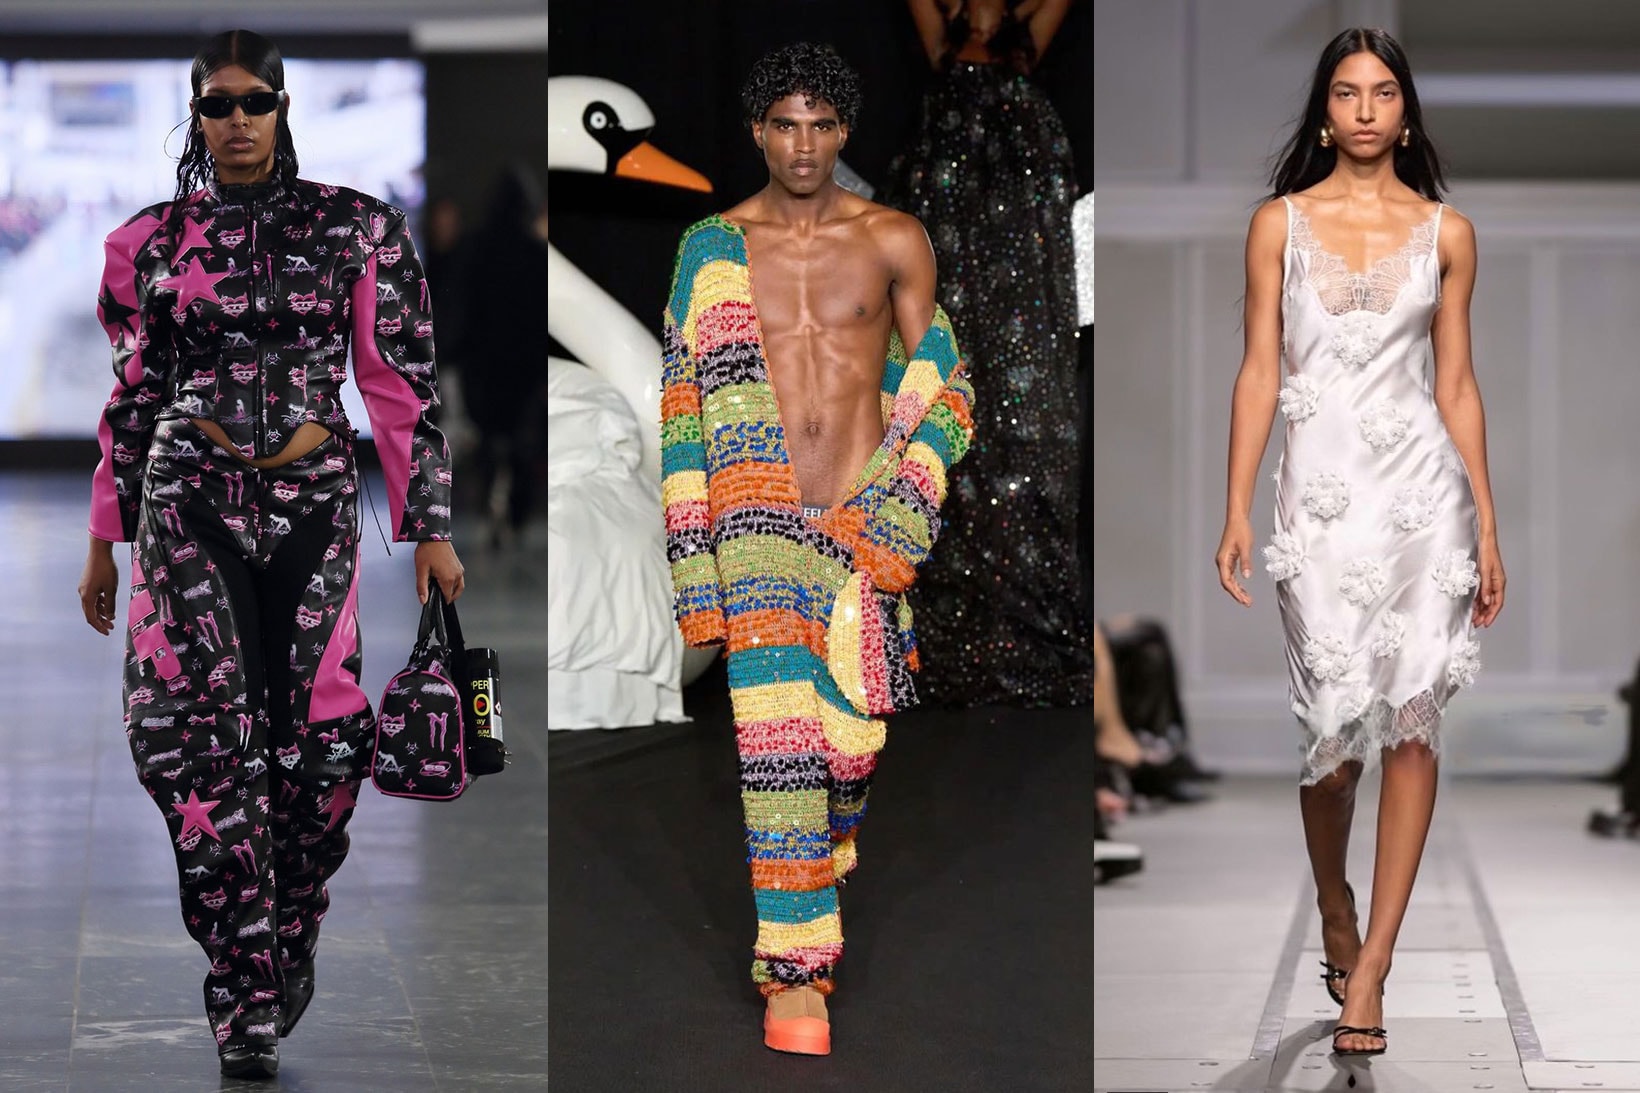 south asian models london paris milan new york fashion week runway clothes 